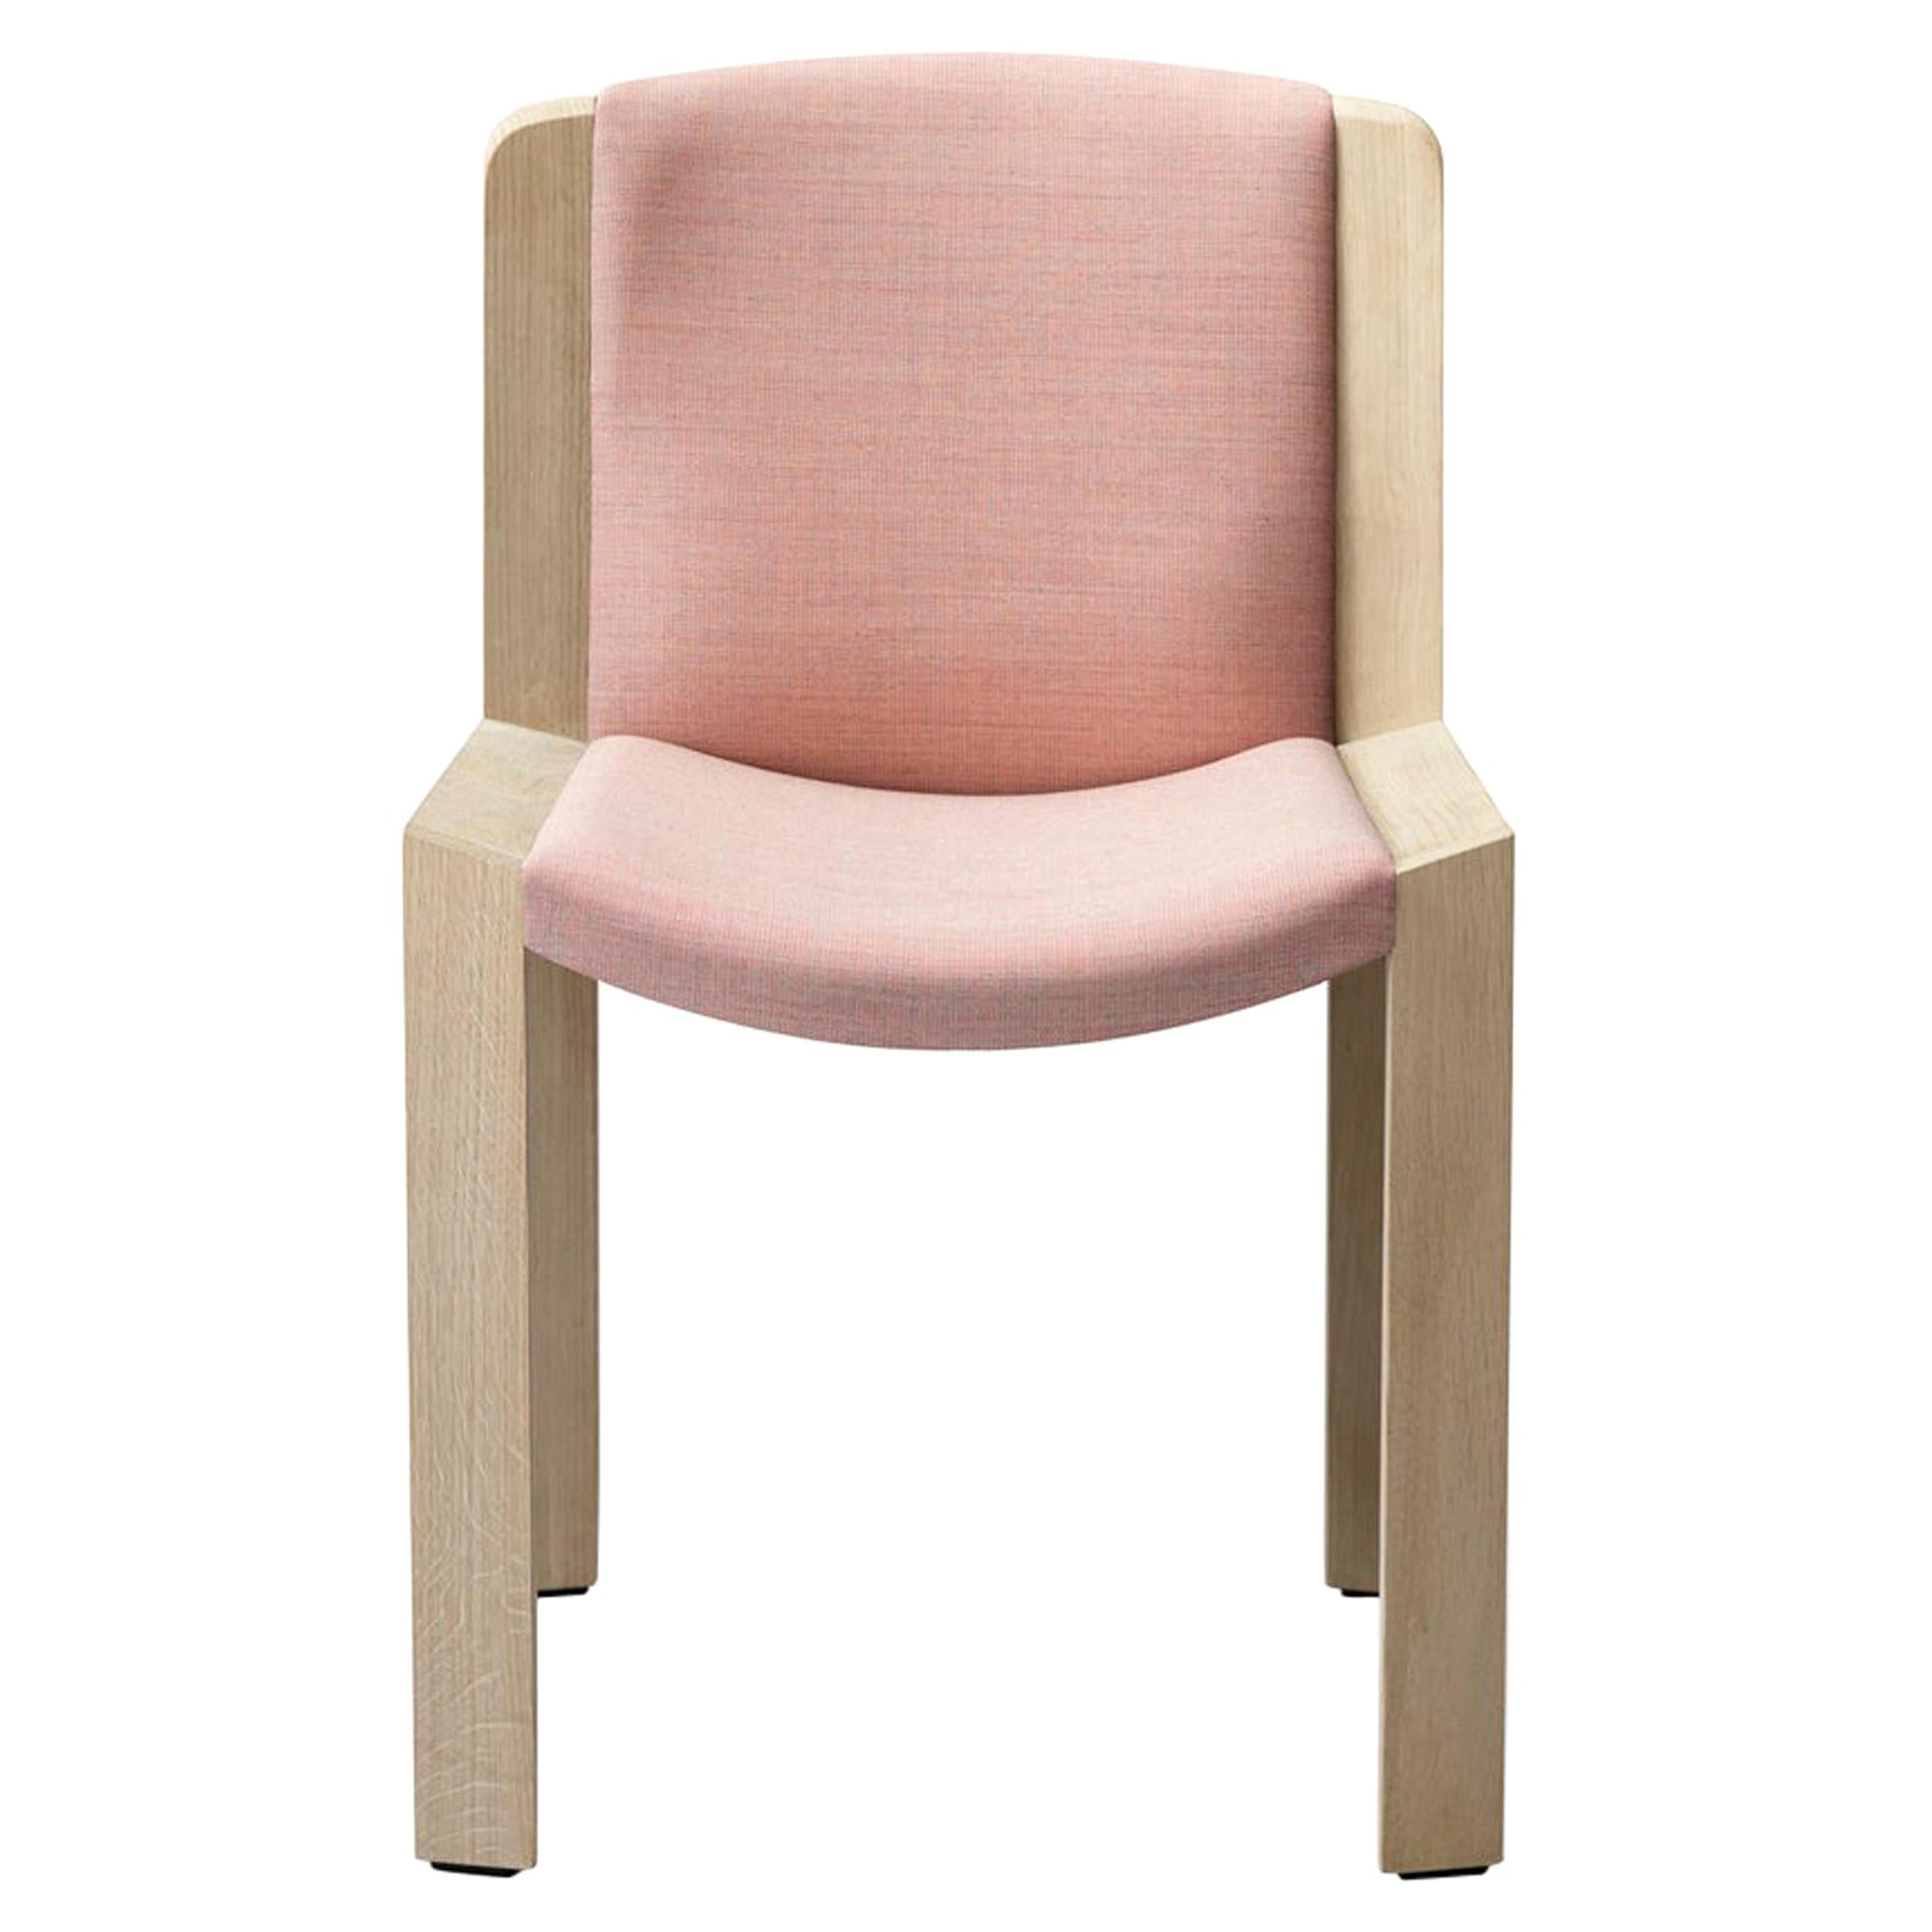 Joe Colombo 'Chair 300' Wood and Kvadrat Fabric by Karakter For Sale